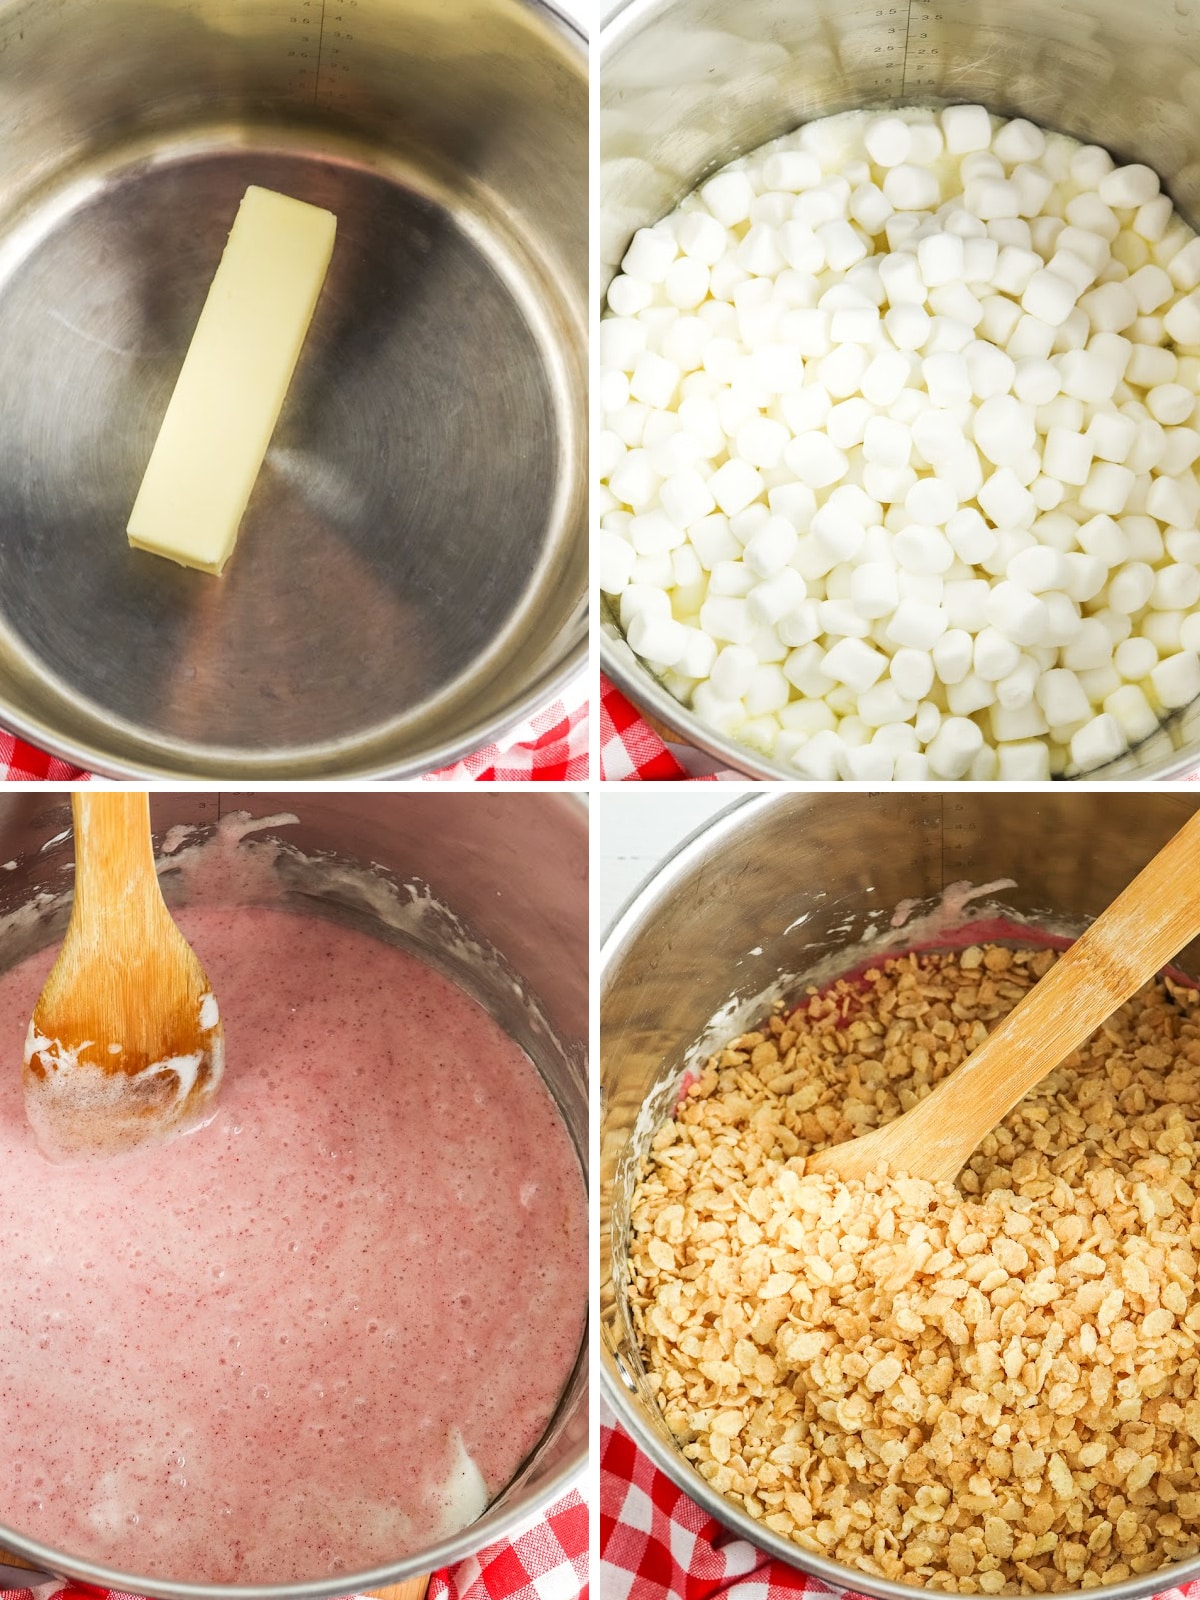 Steps to make strawberry rice crispy treats